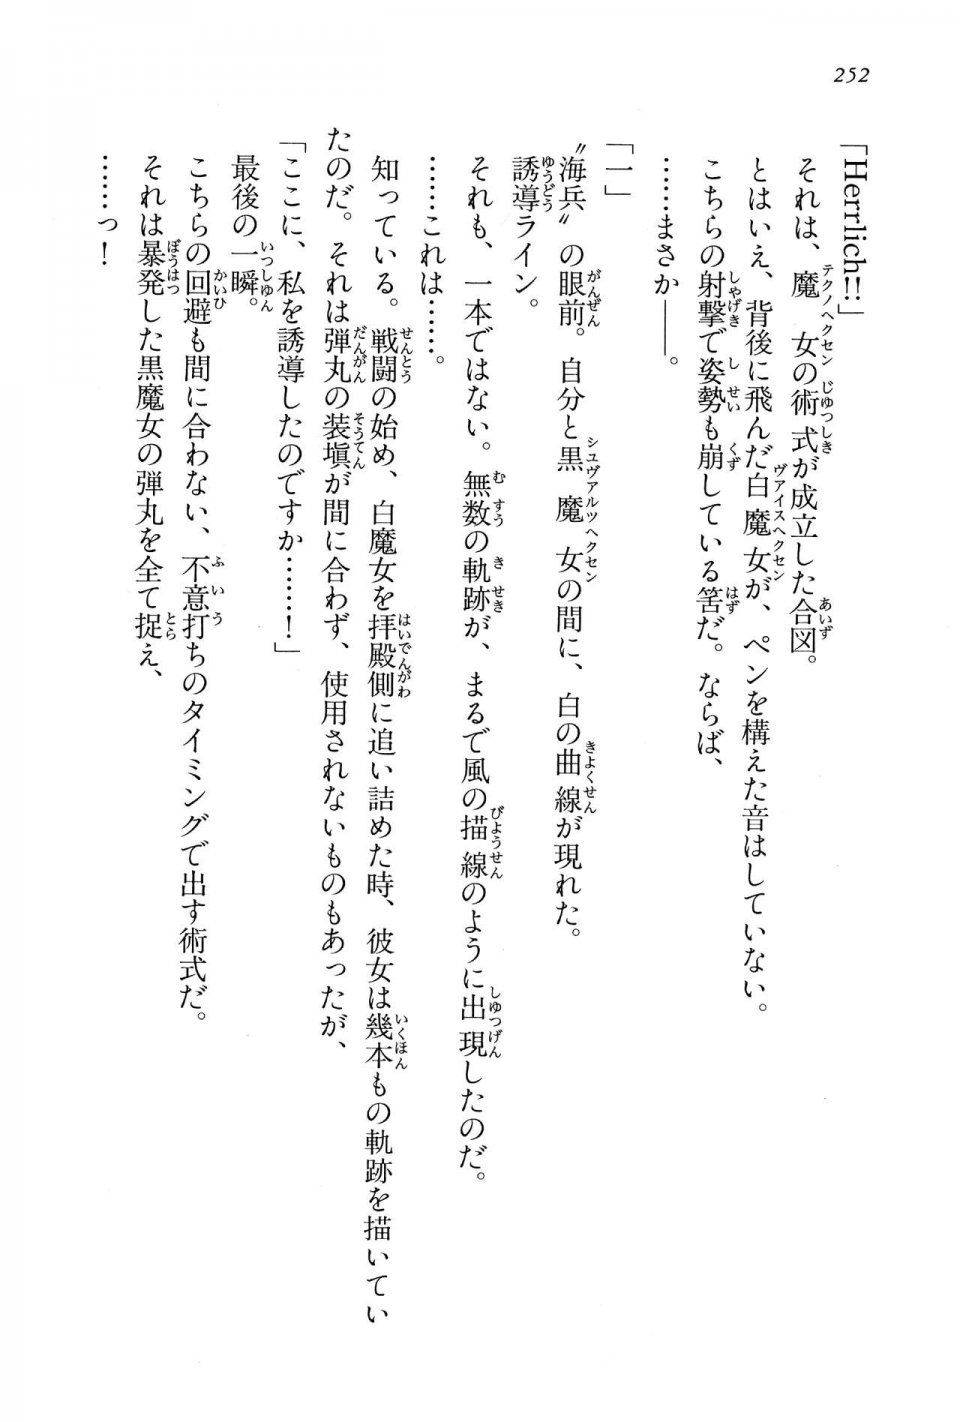 Kyoukai Senjou no Horizon BD Special Mininovel Vol 6(3B) - Photo #256